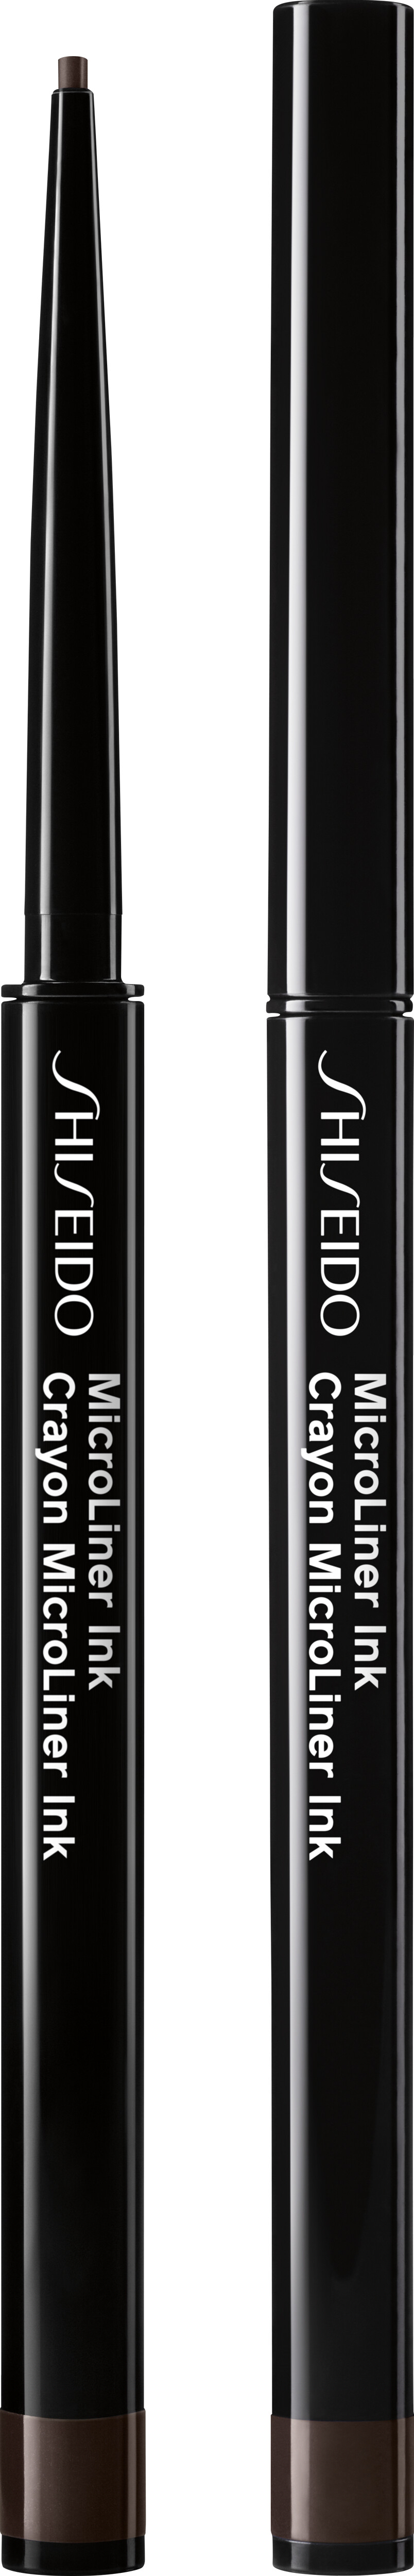 Shiseido MicroLiner Ink 0.08g 02 - Brown